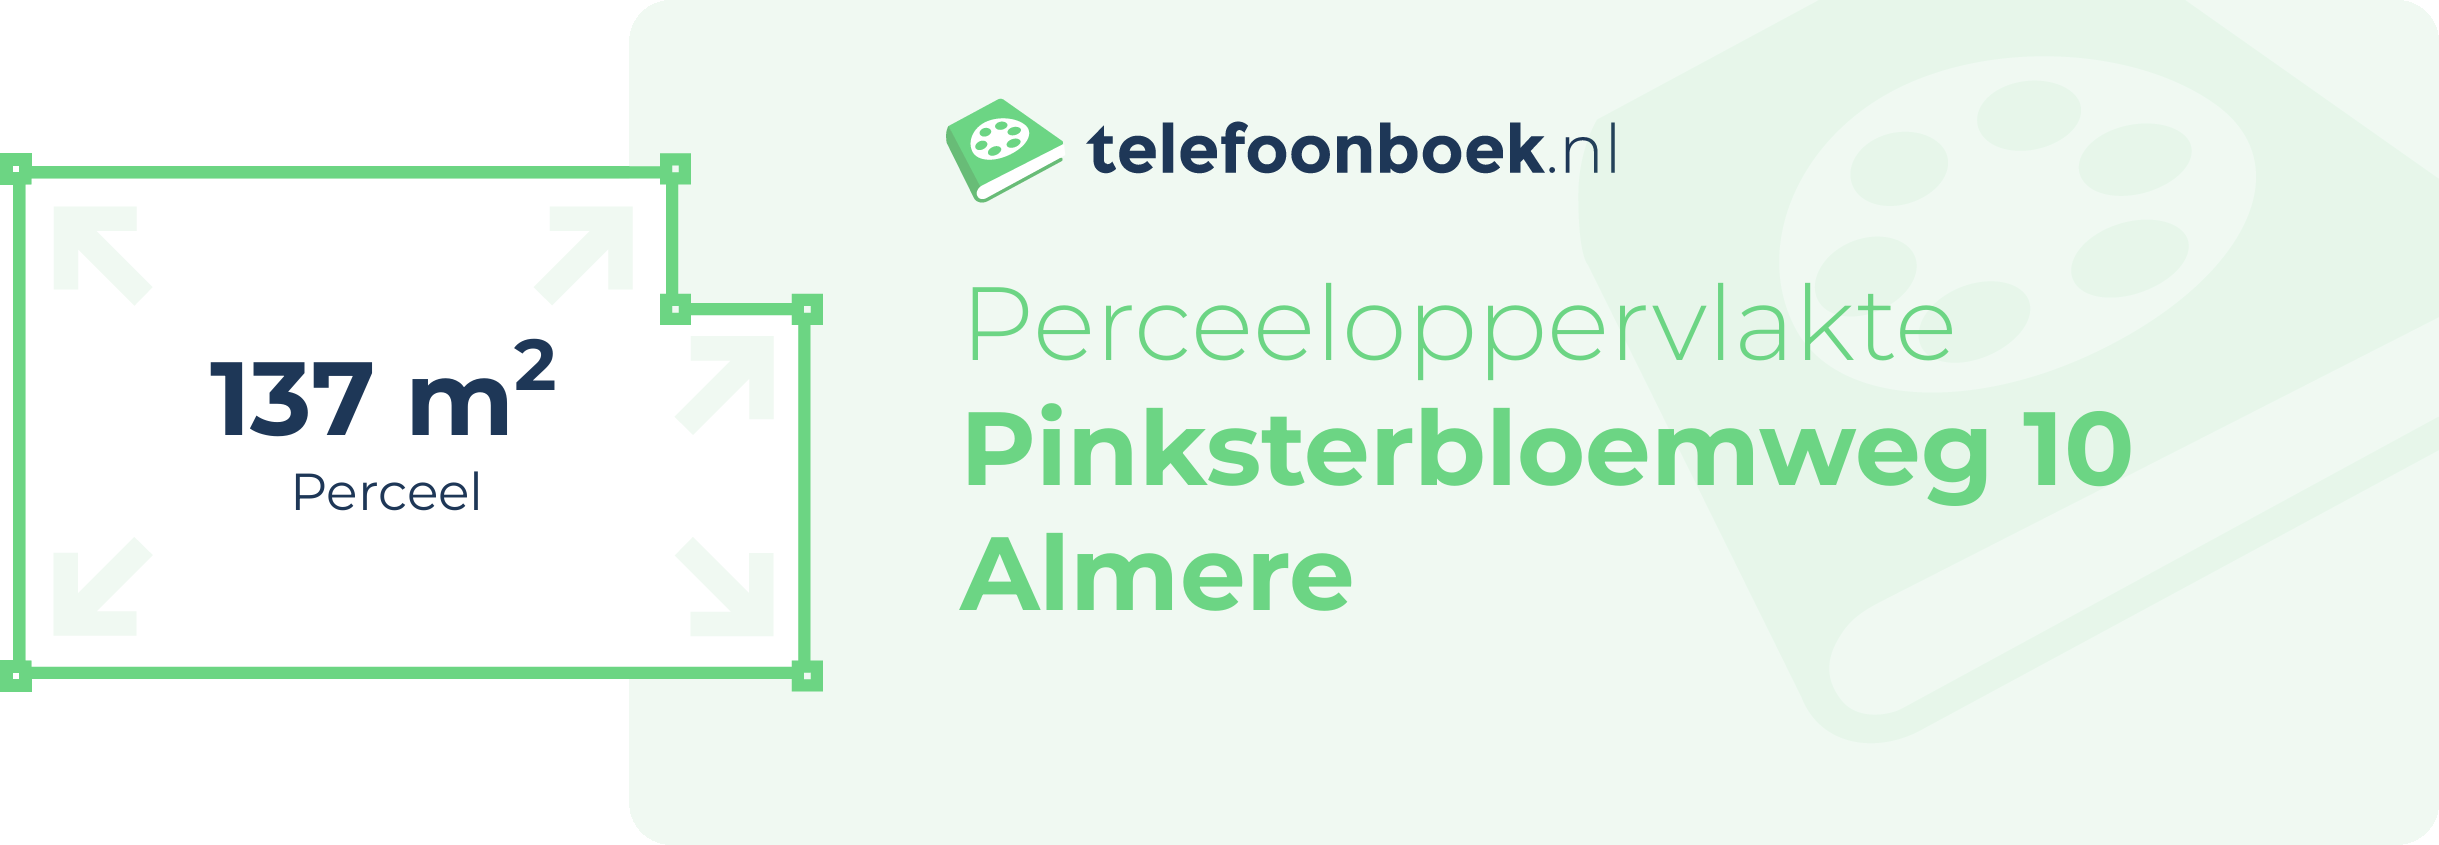 Perceeloppervlakte Pinksterbloemweg 10 Almere